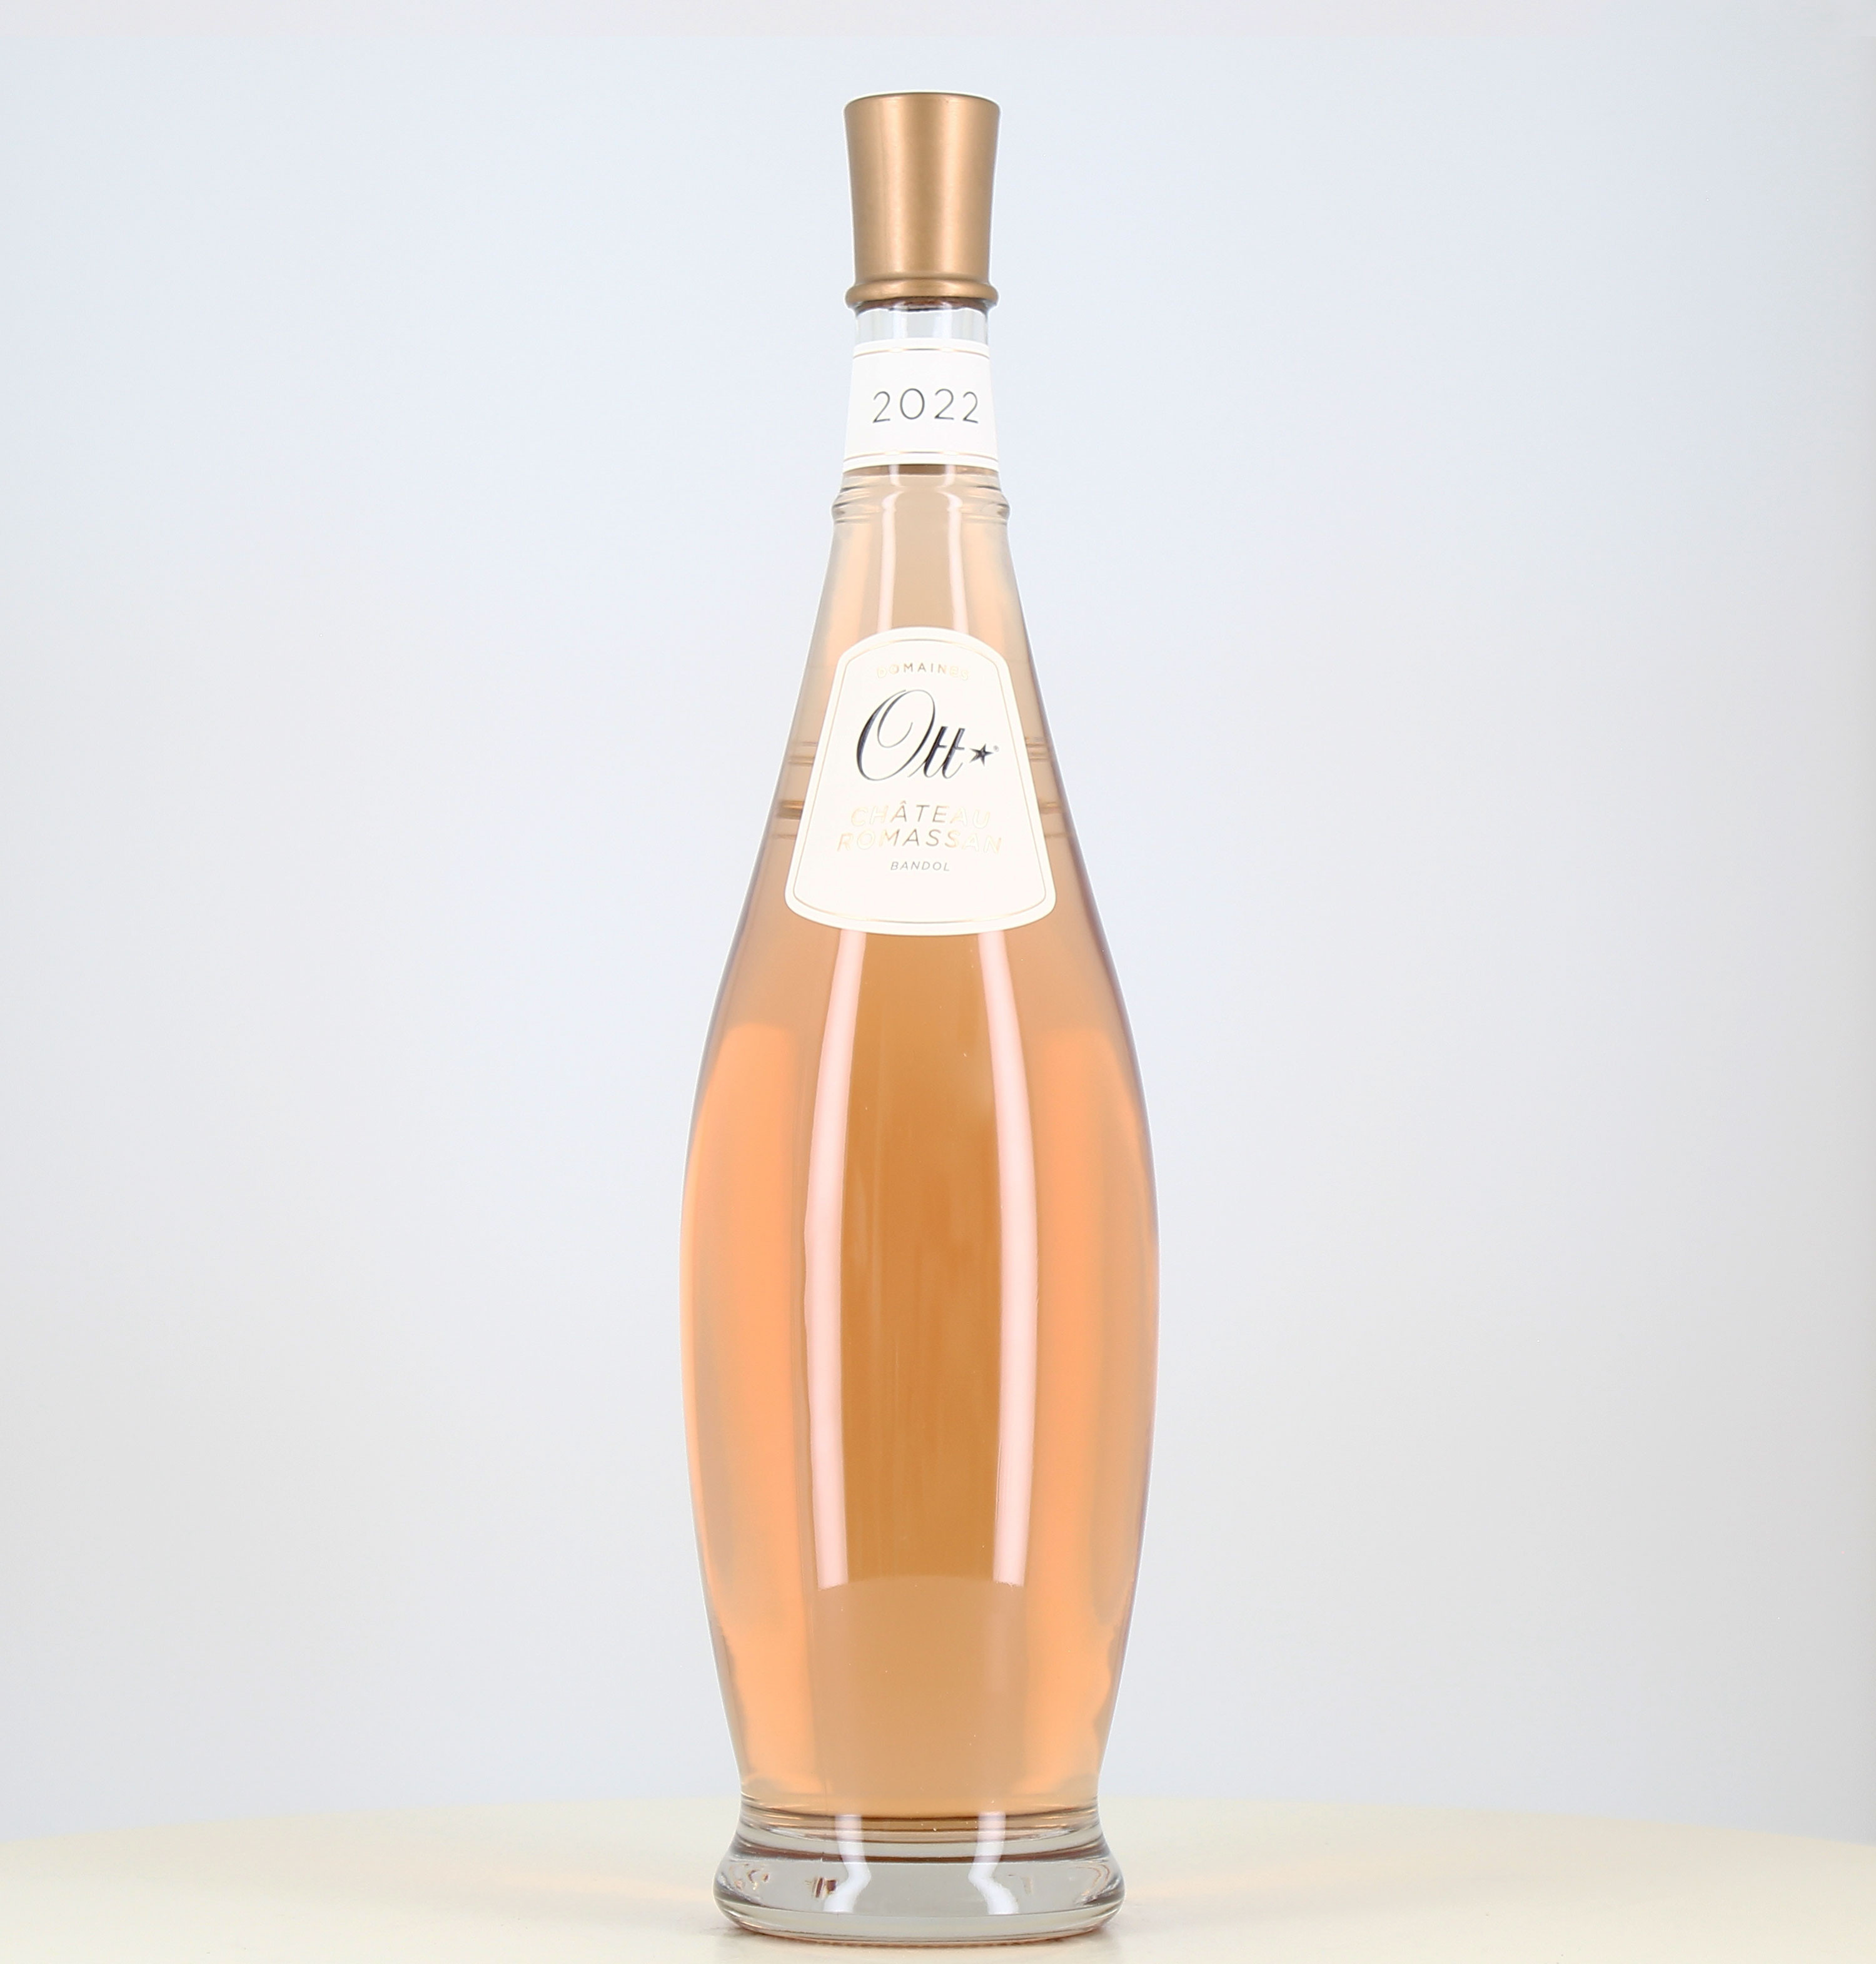 Jéroboam vin rosé Ott bandol Château Romassan 2022 